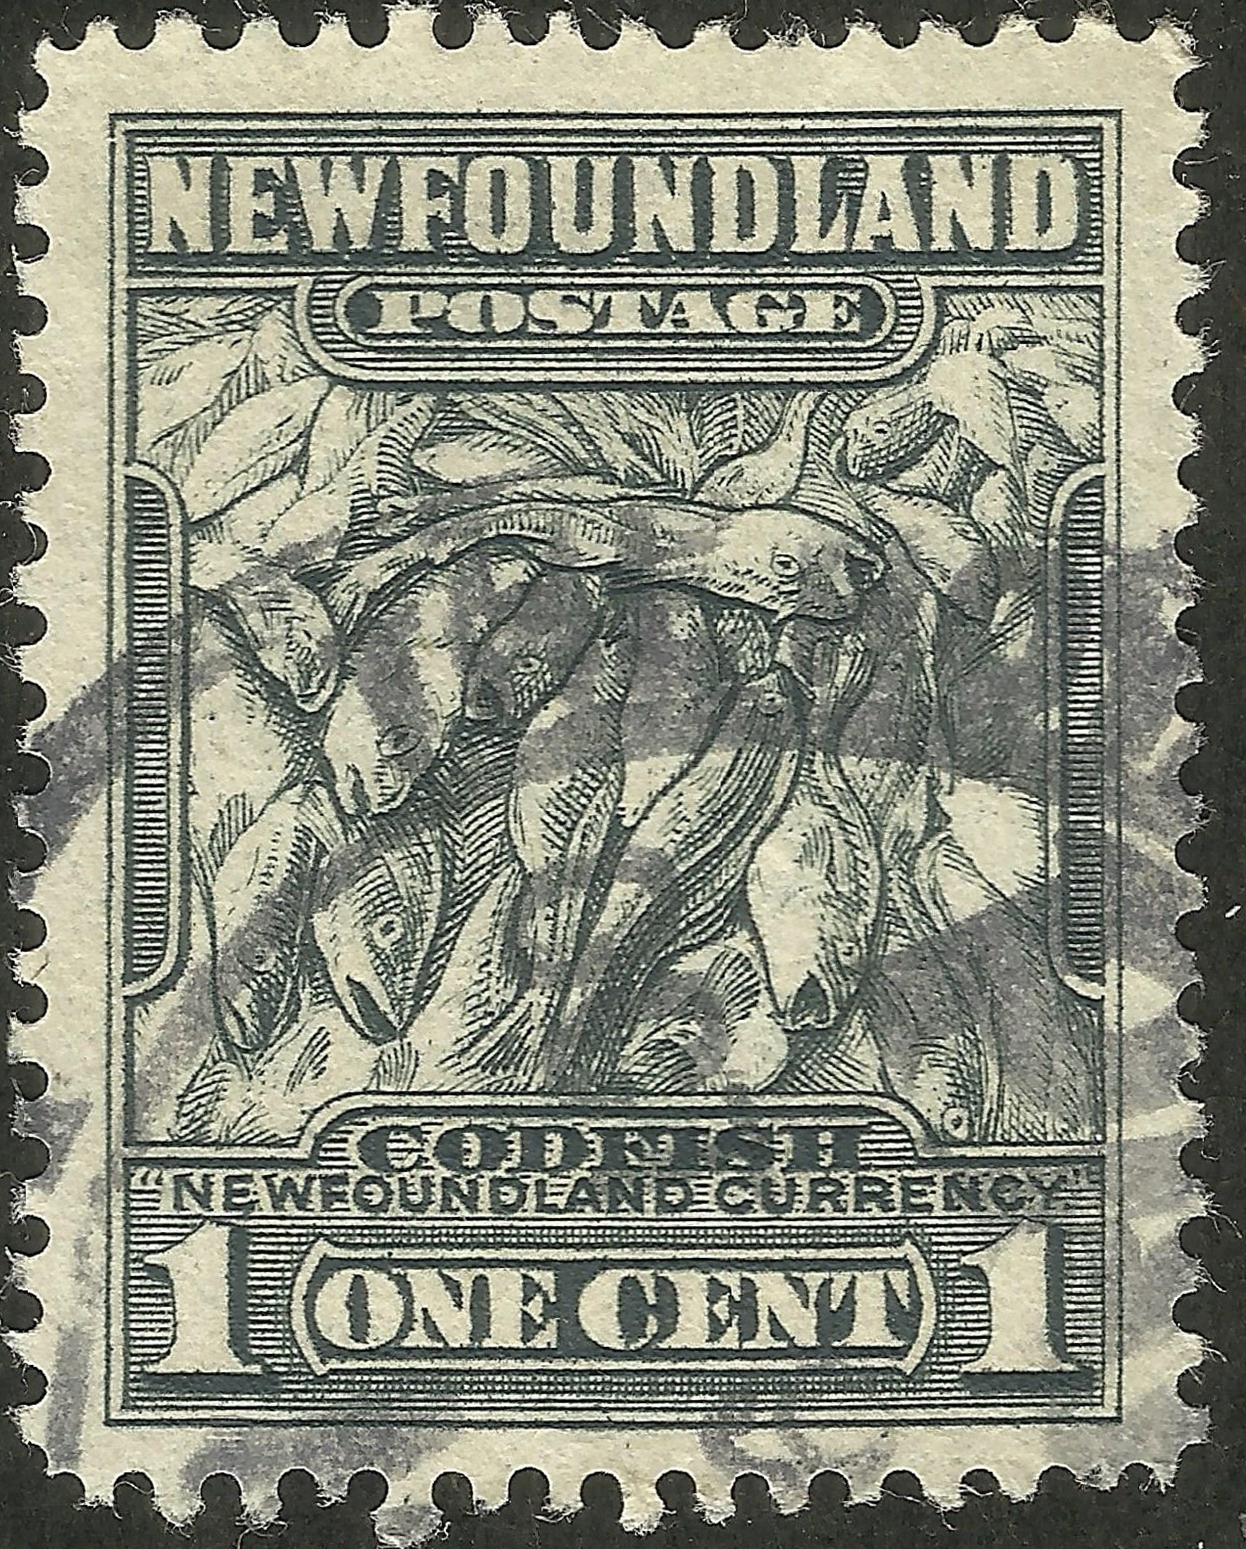 Newfoundland - Scott #184 (1932)